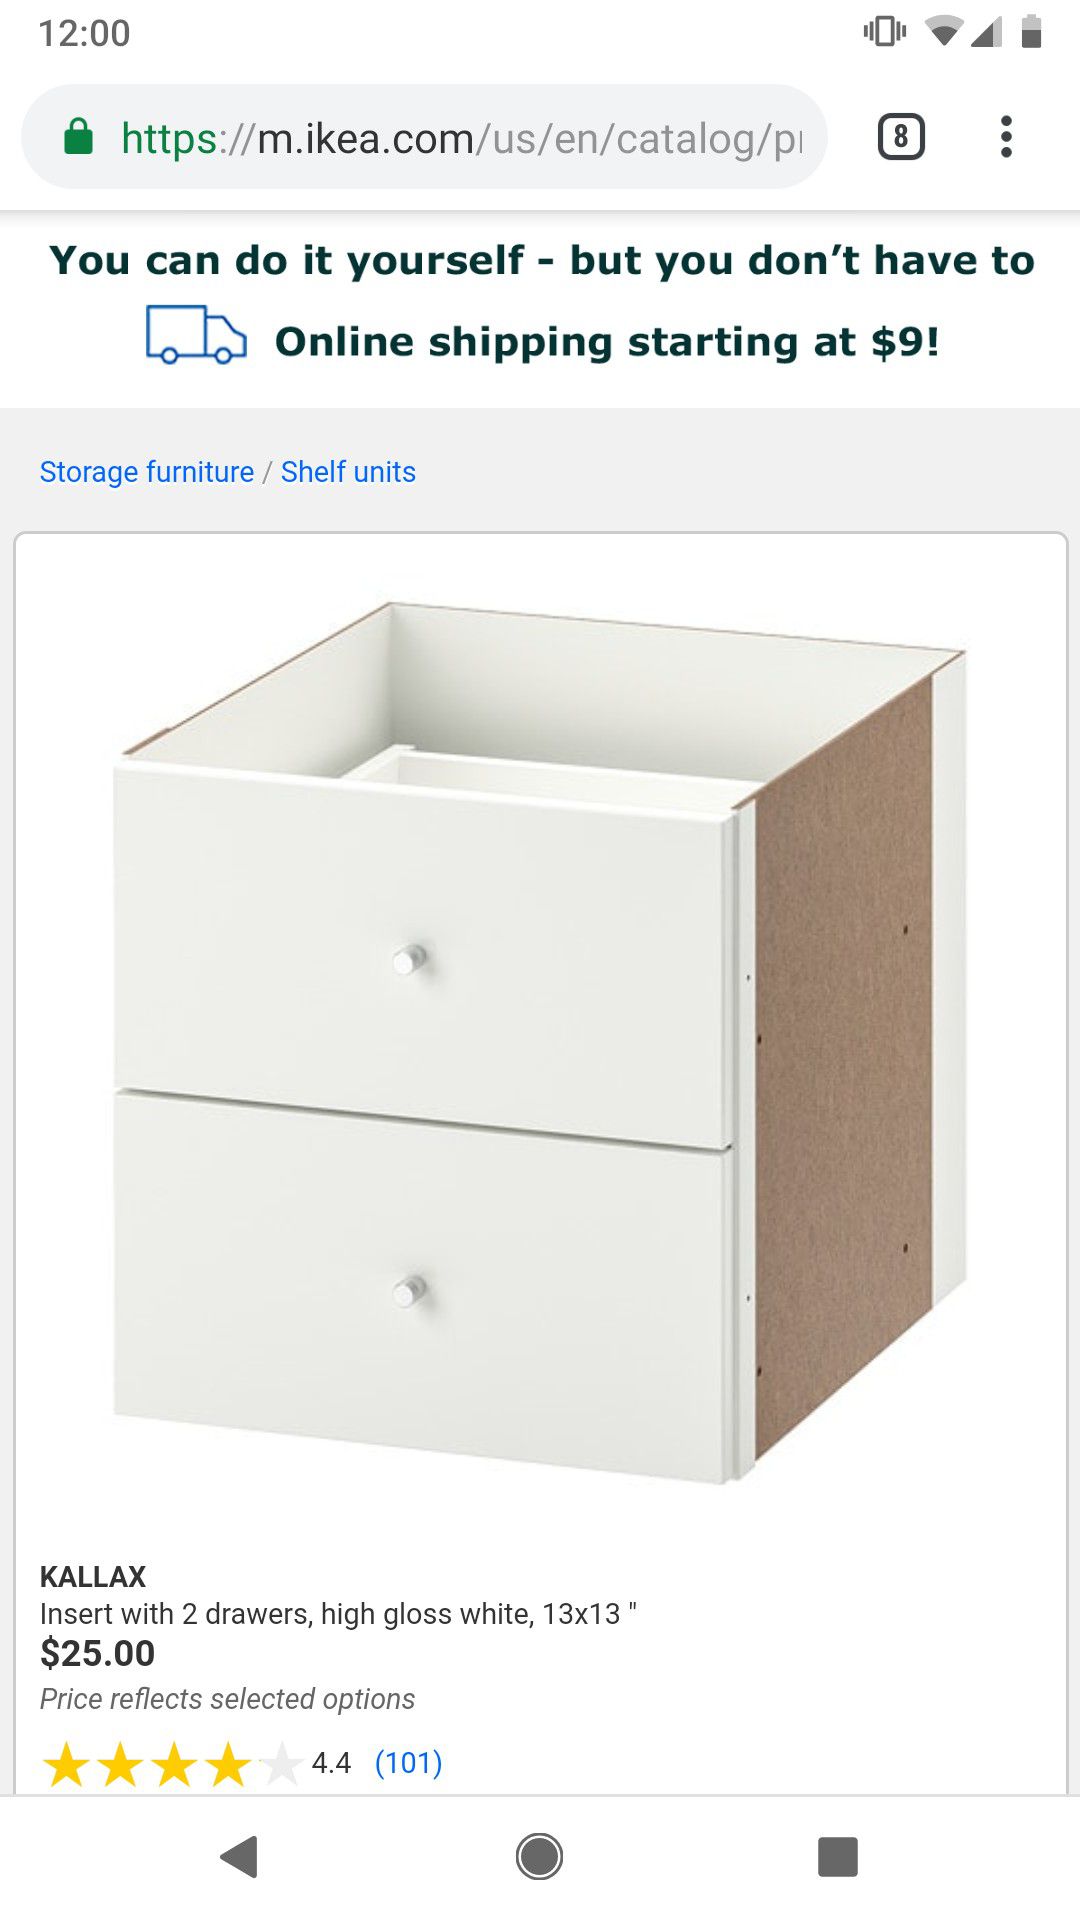 KALLAX Insert with 2 drawers, high gloss white, 13x13 - IKEA